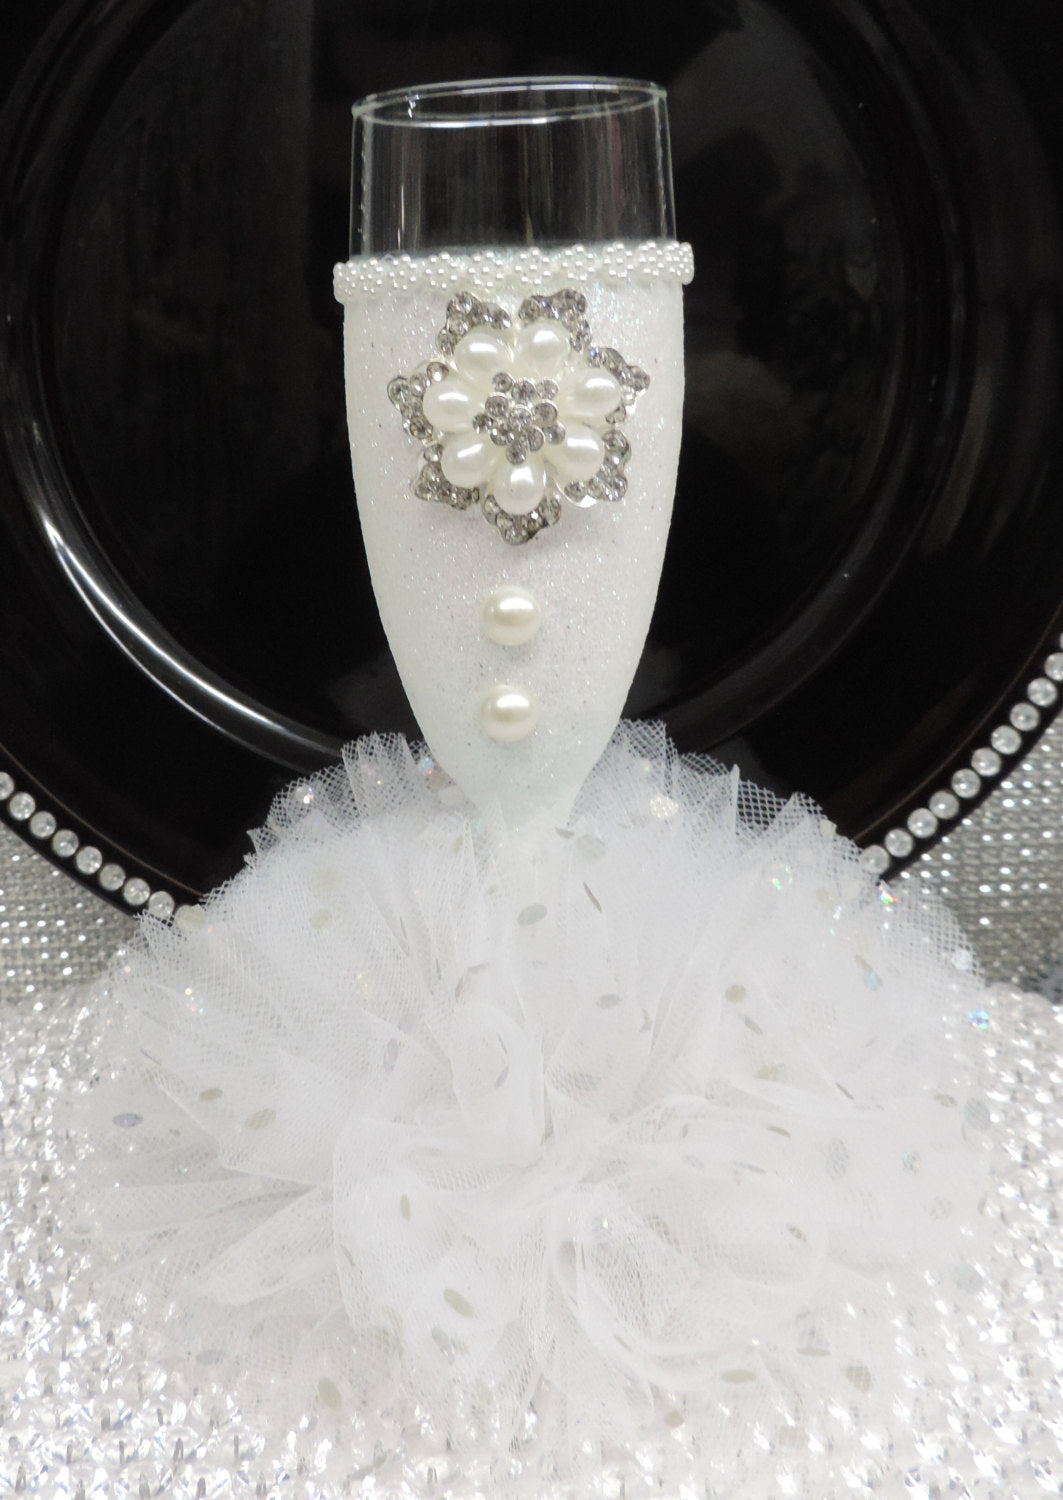 Iridescent Glitter Bridal Dress Wine Flute with Tulle Skirt